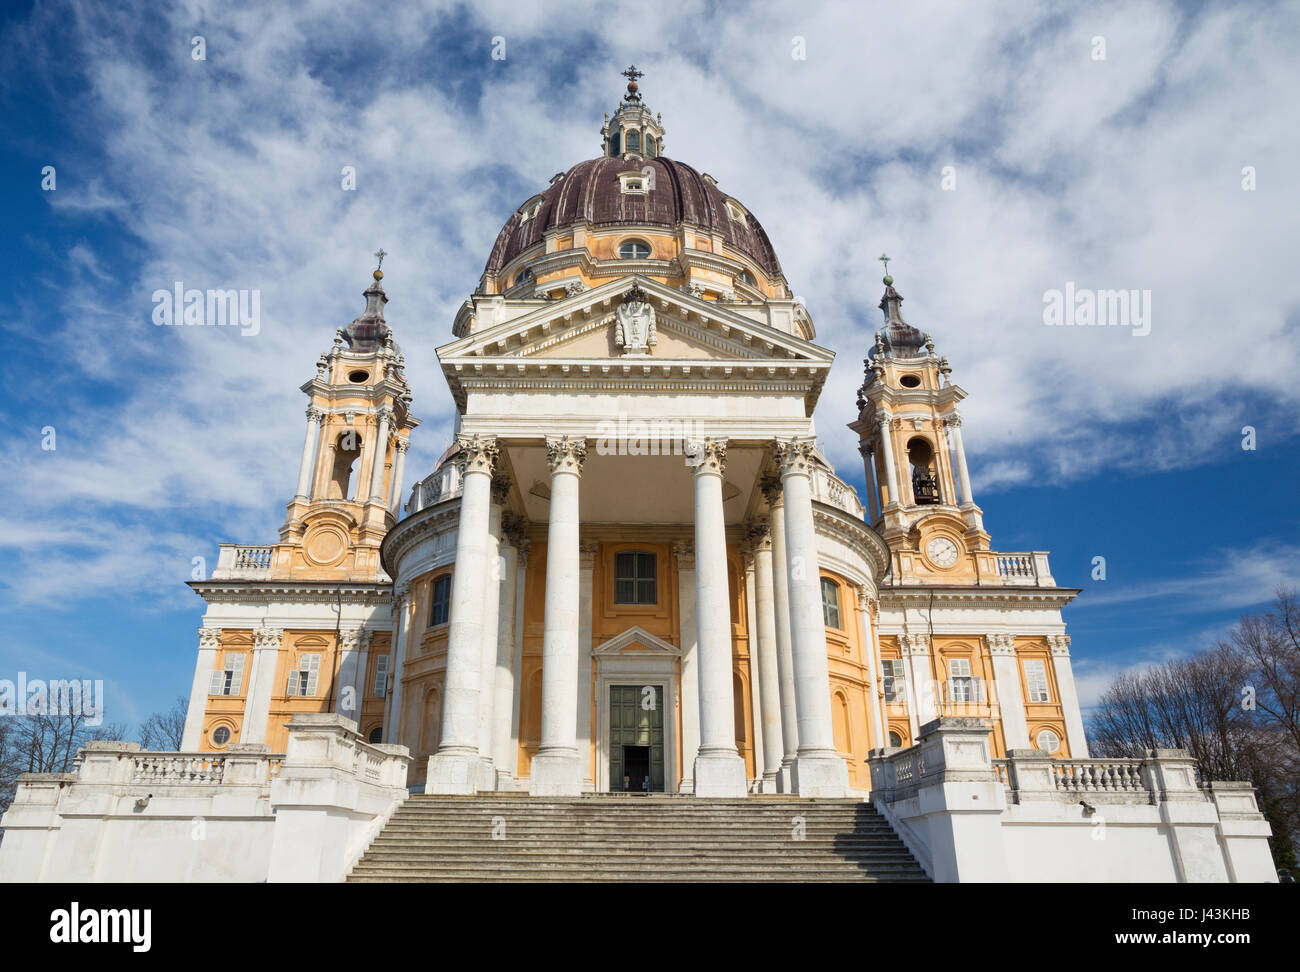 Torino - The church Basilica di Superga. Stock Photo